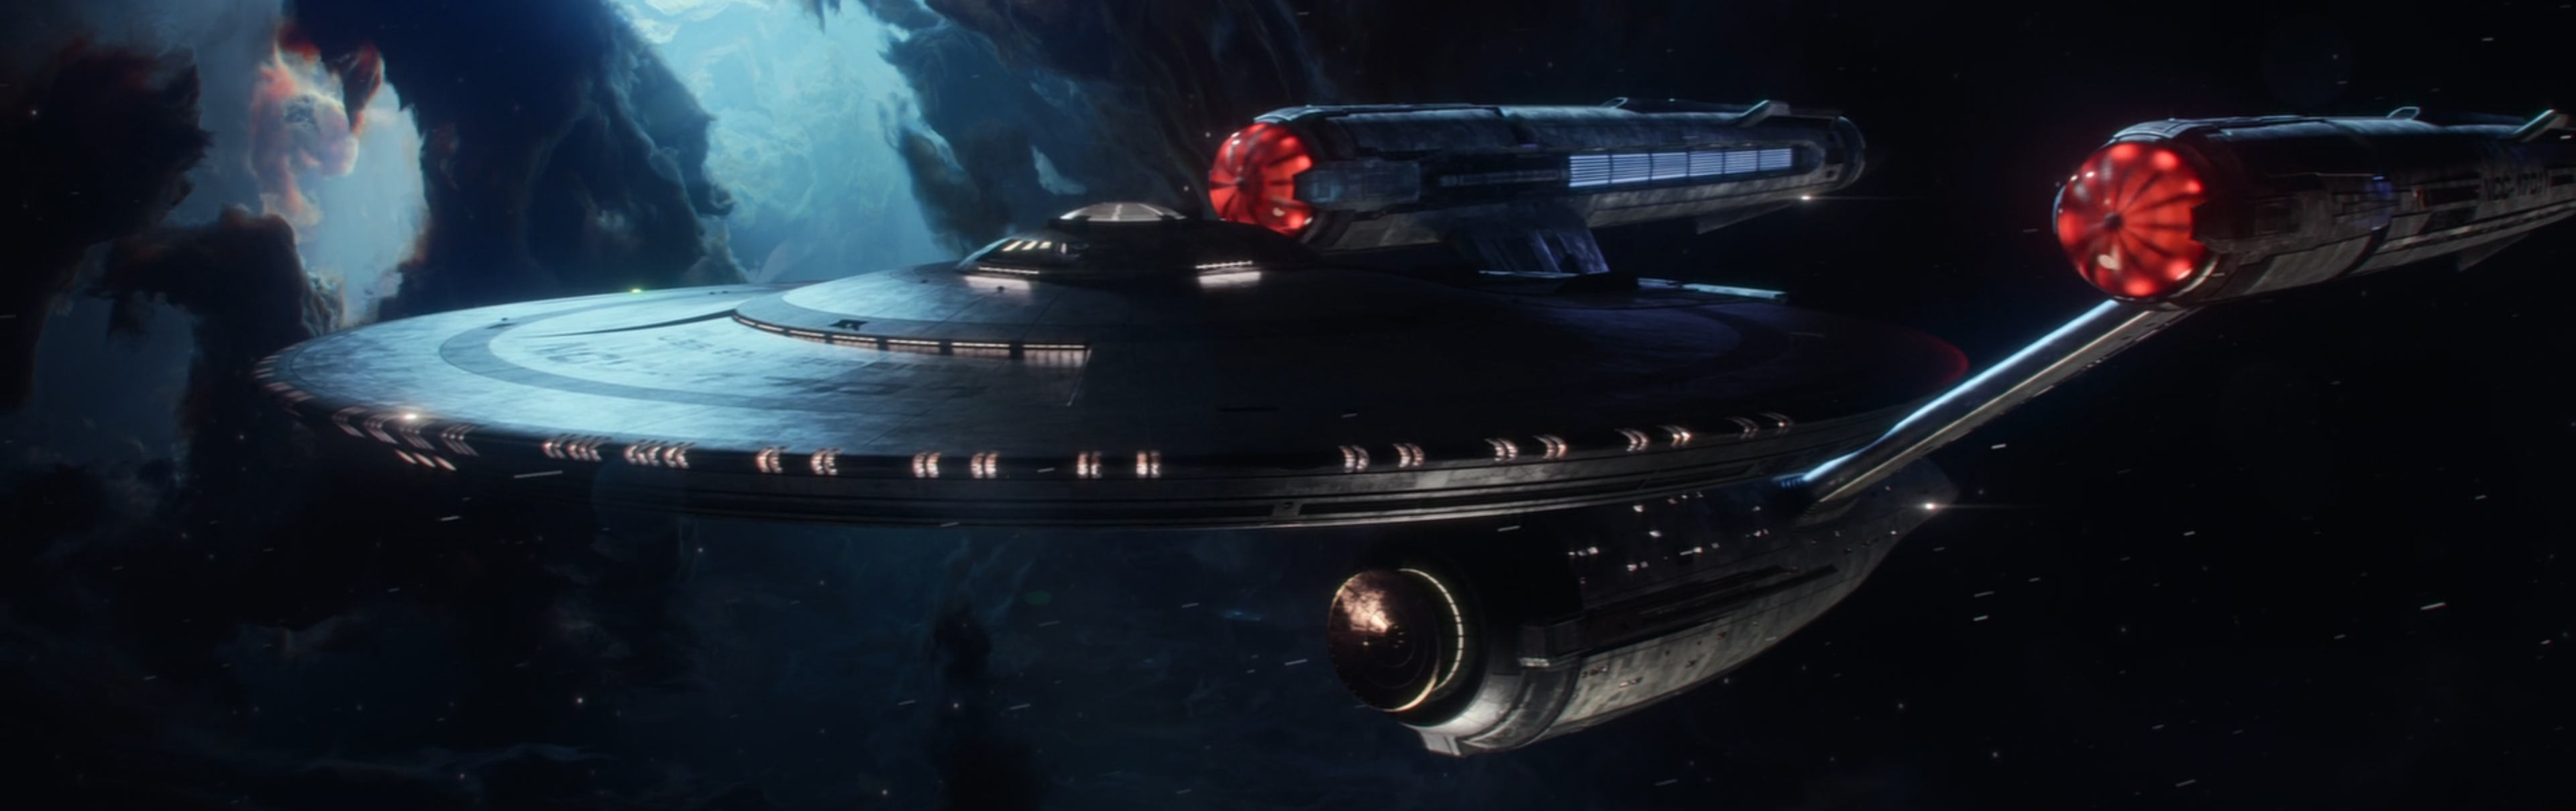 The USS Enterprise.